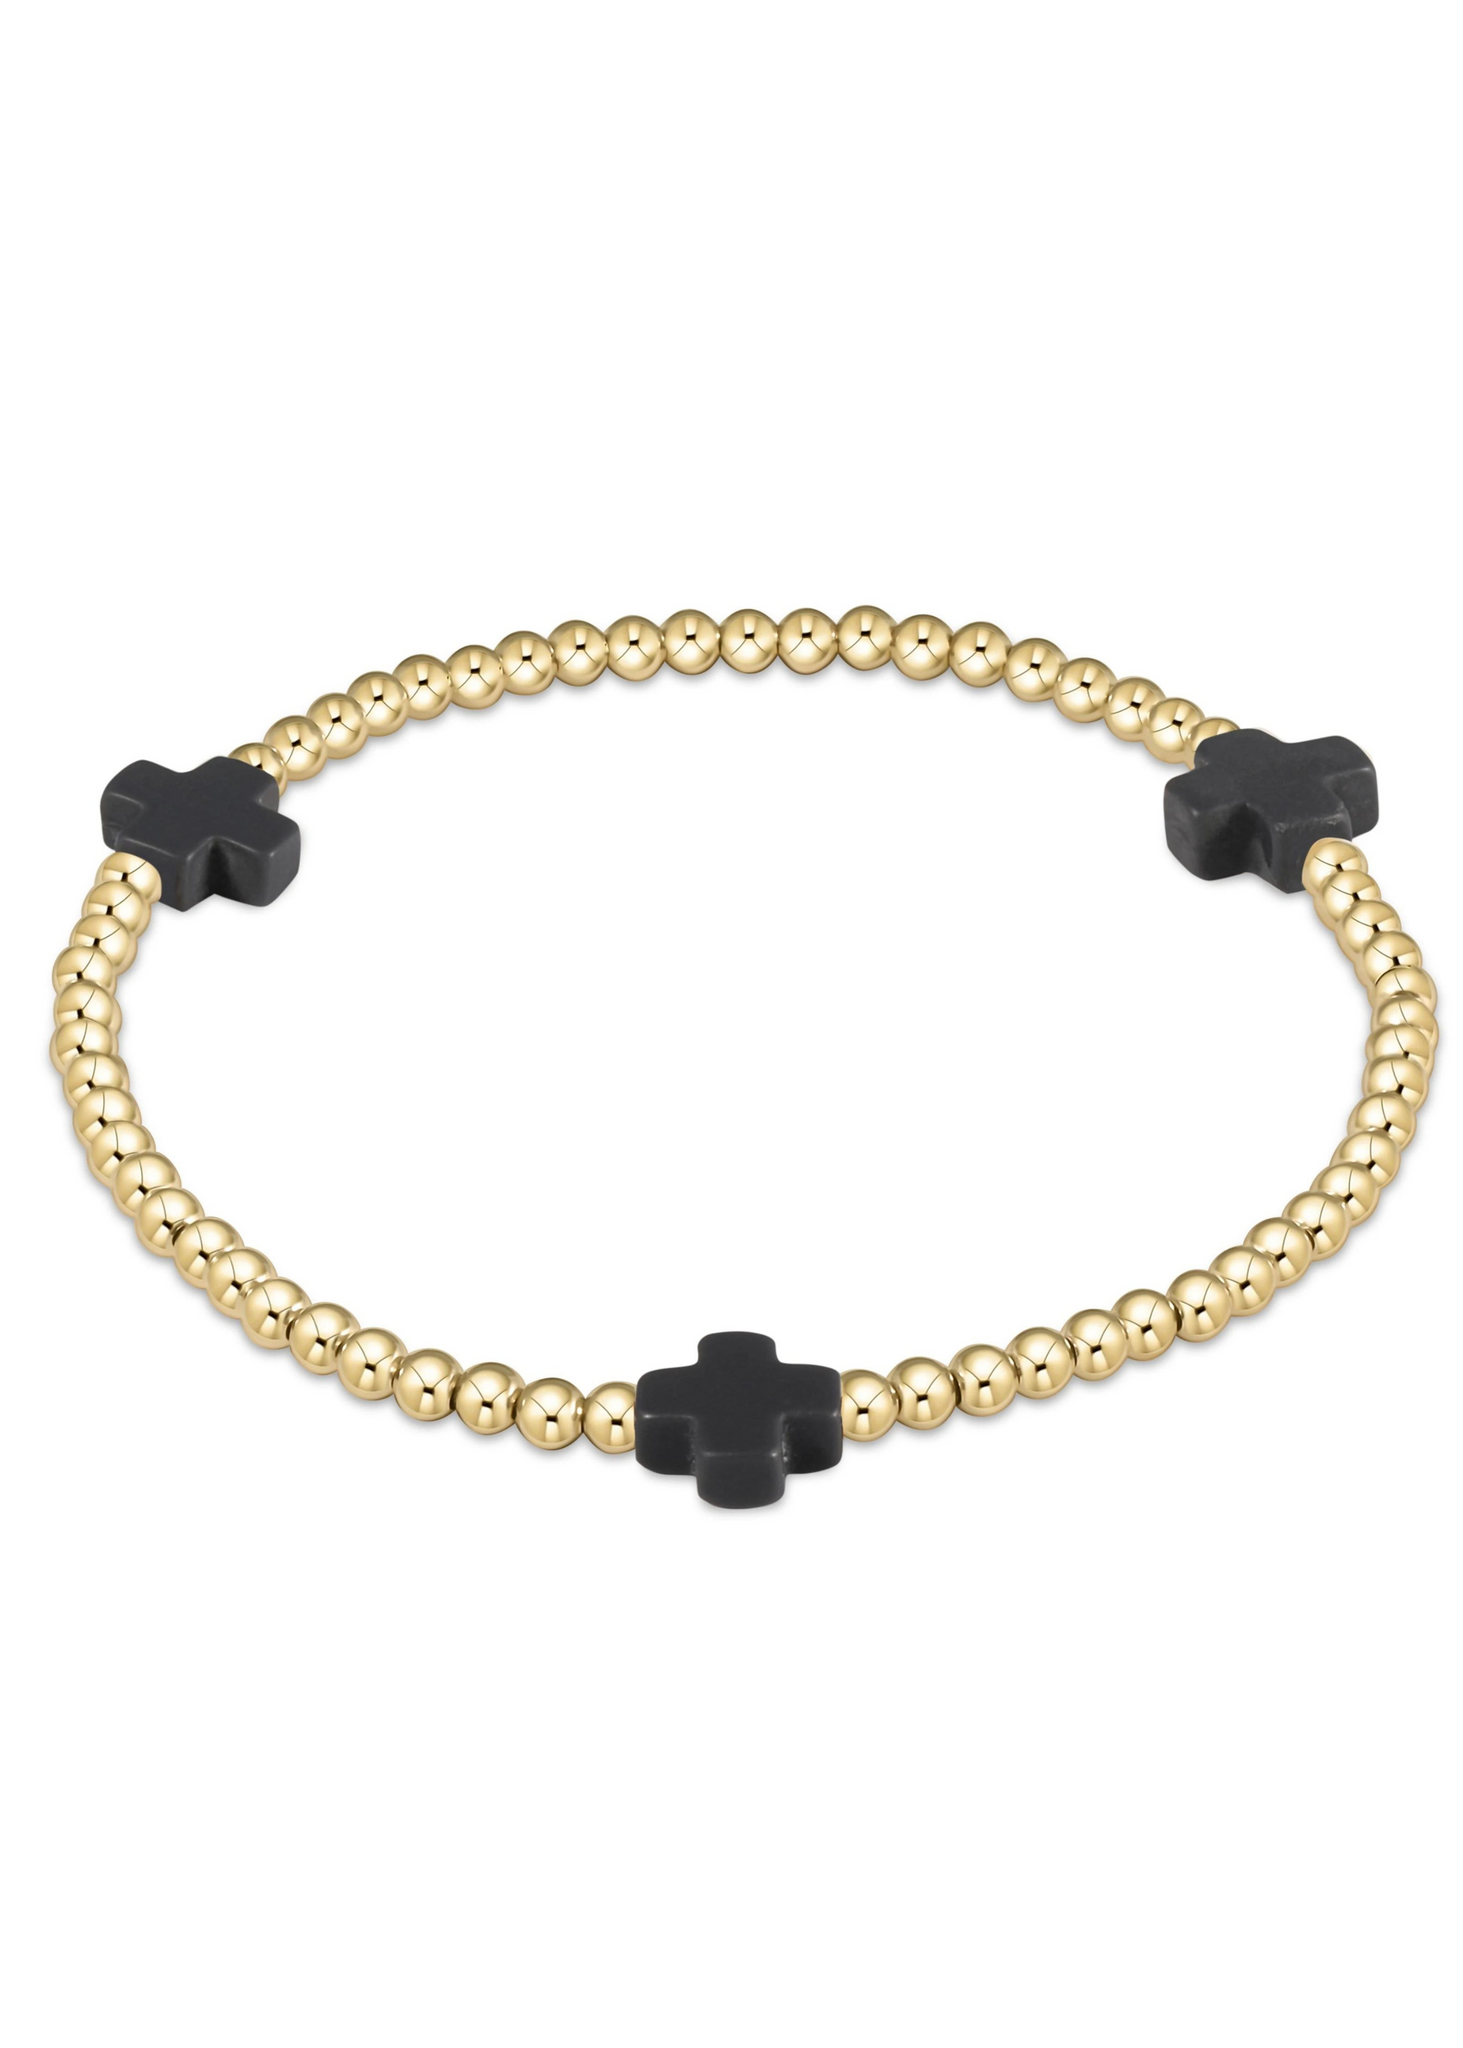 Signature Cross Gold Pattern 3mm Bead Bracelet - Charcoal